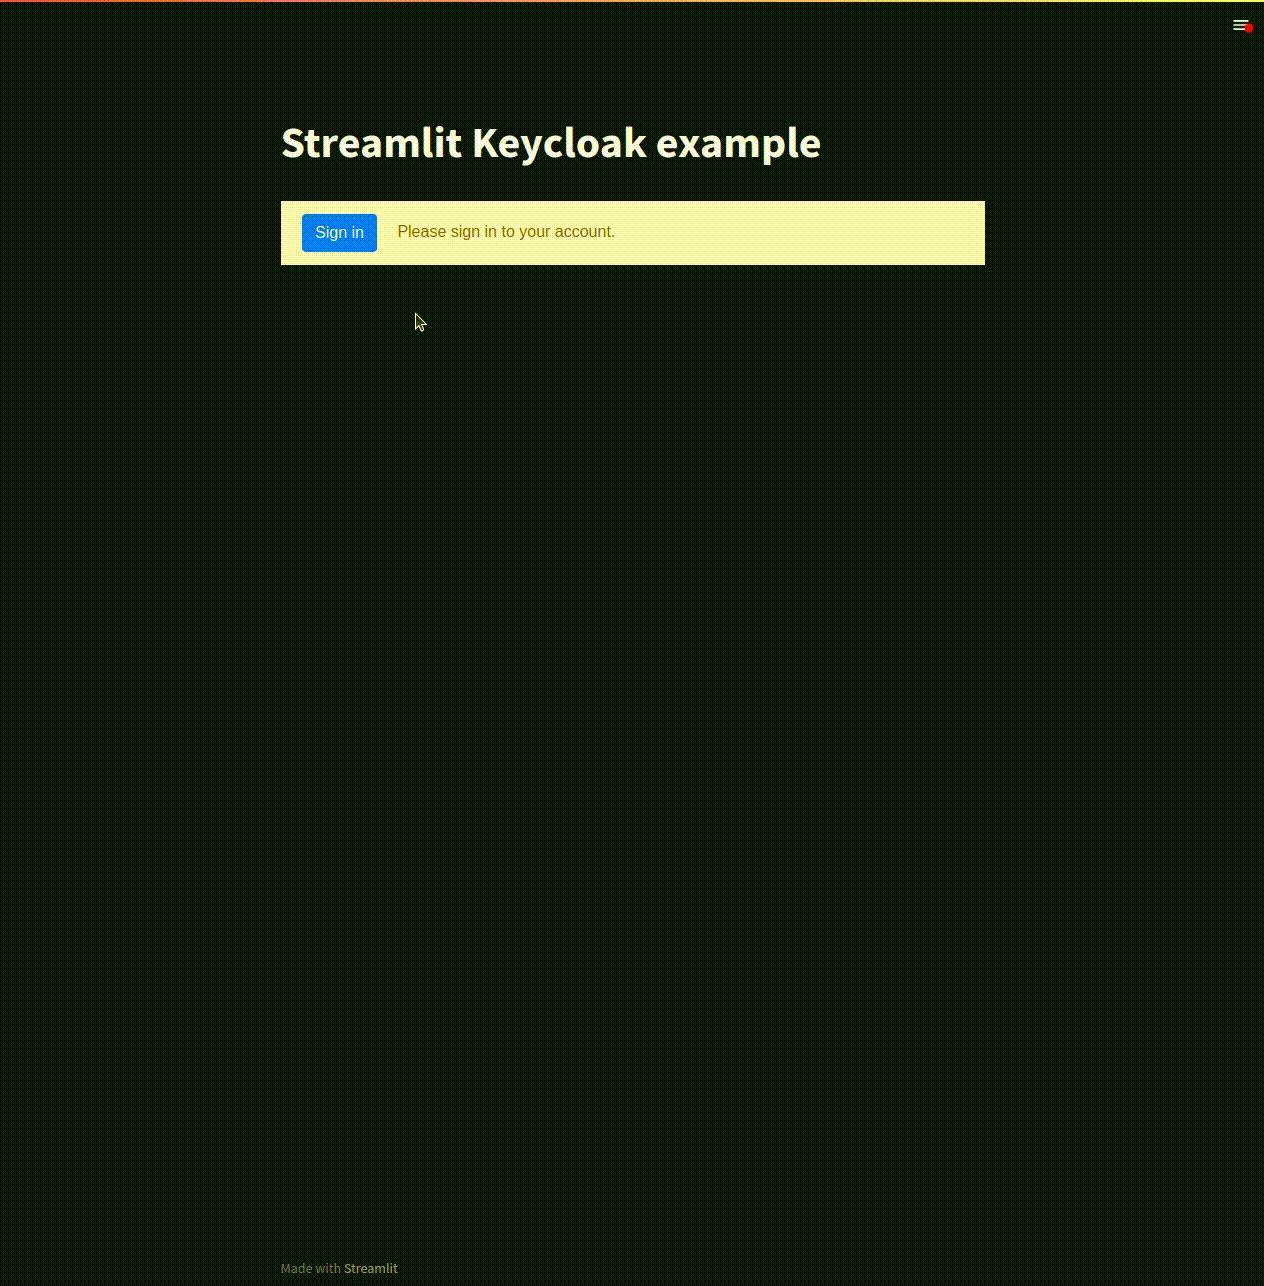 streamlit-keycloak showcase|639x663